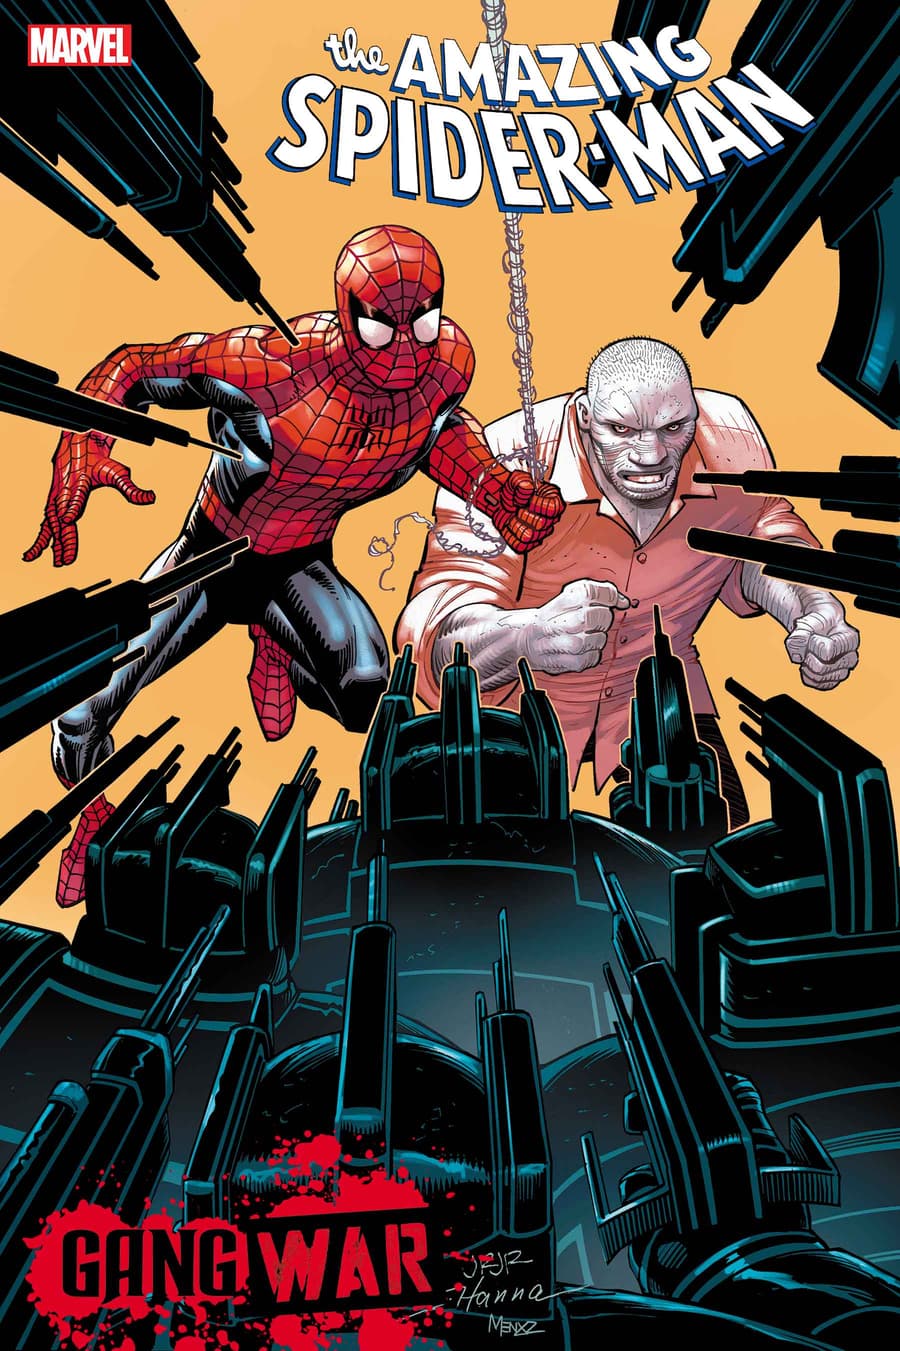 AMAZING SPIDER-MAN #40 cover by John Romita Jr.